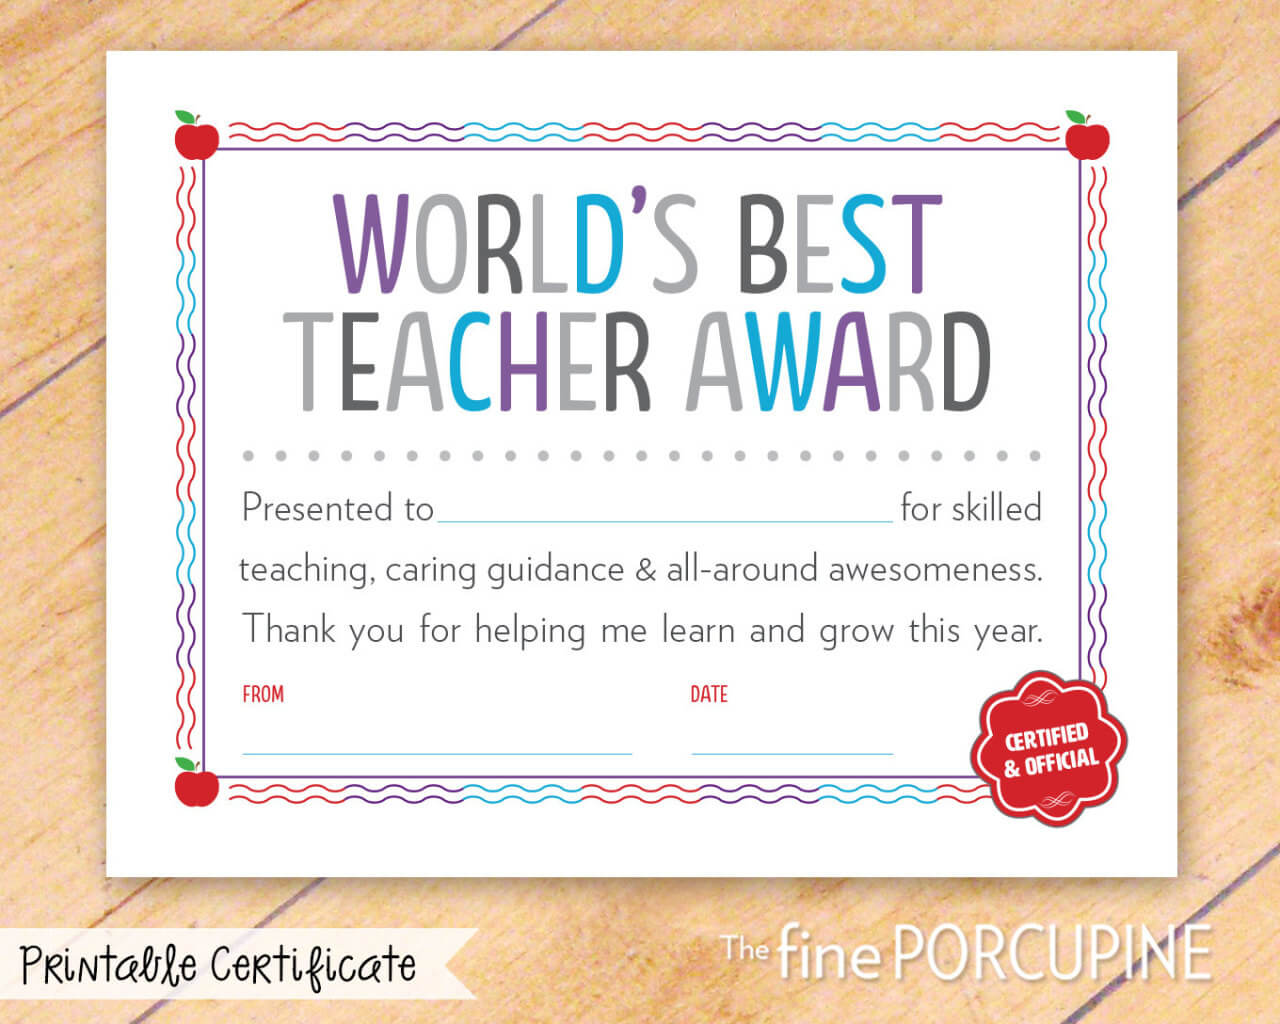 The Fine Porcupine — World's Best Teacher Award, Printable Regarding Best Teacher Certificate Templates Free